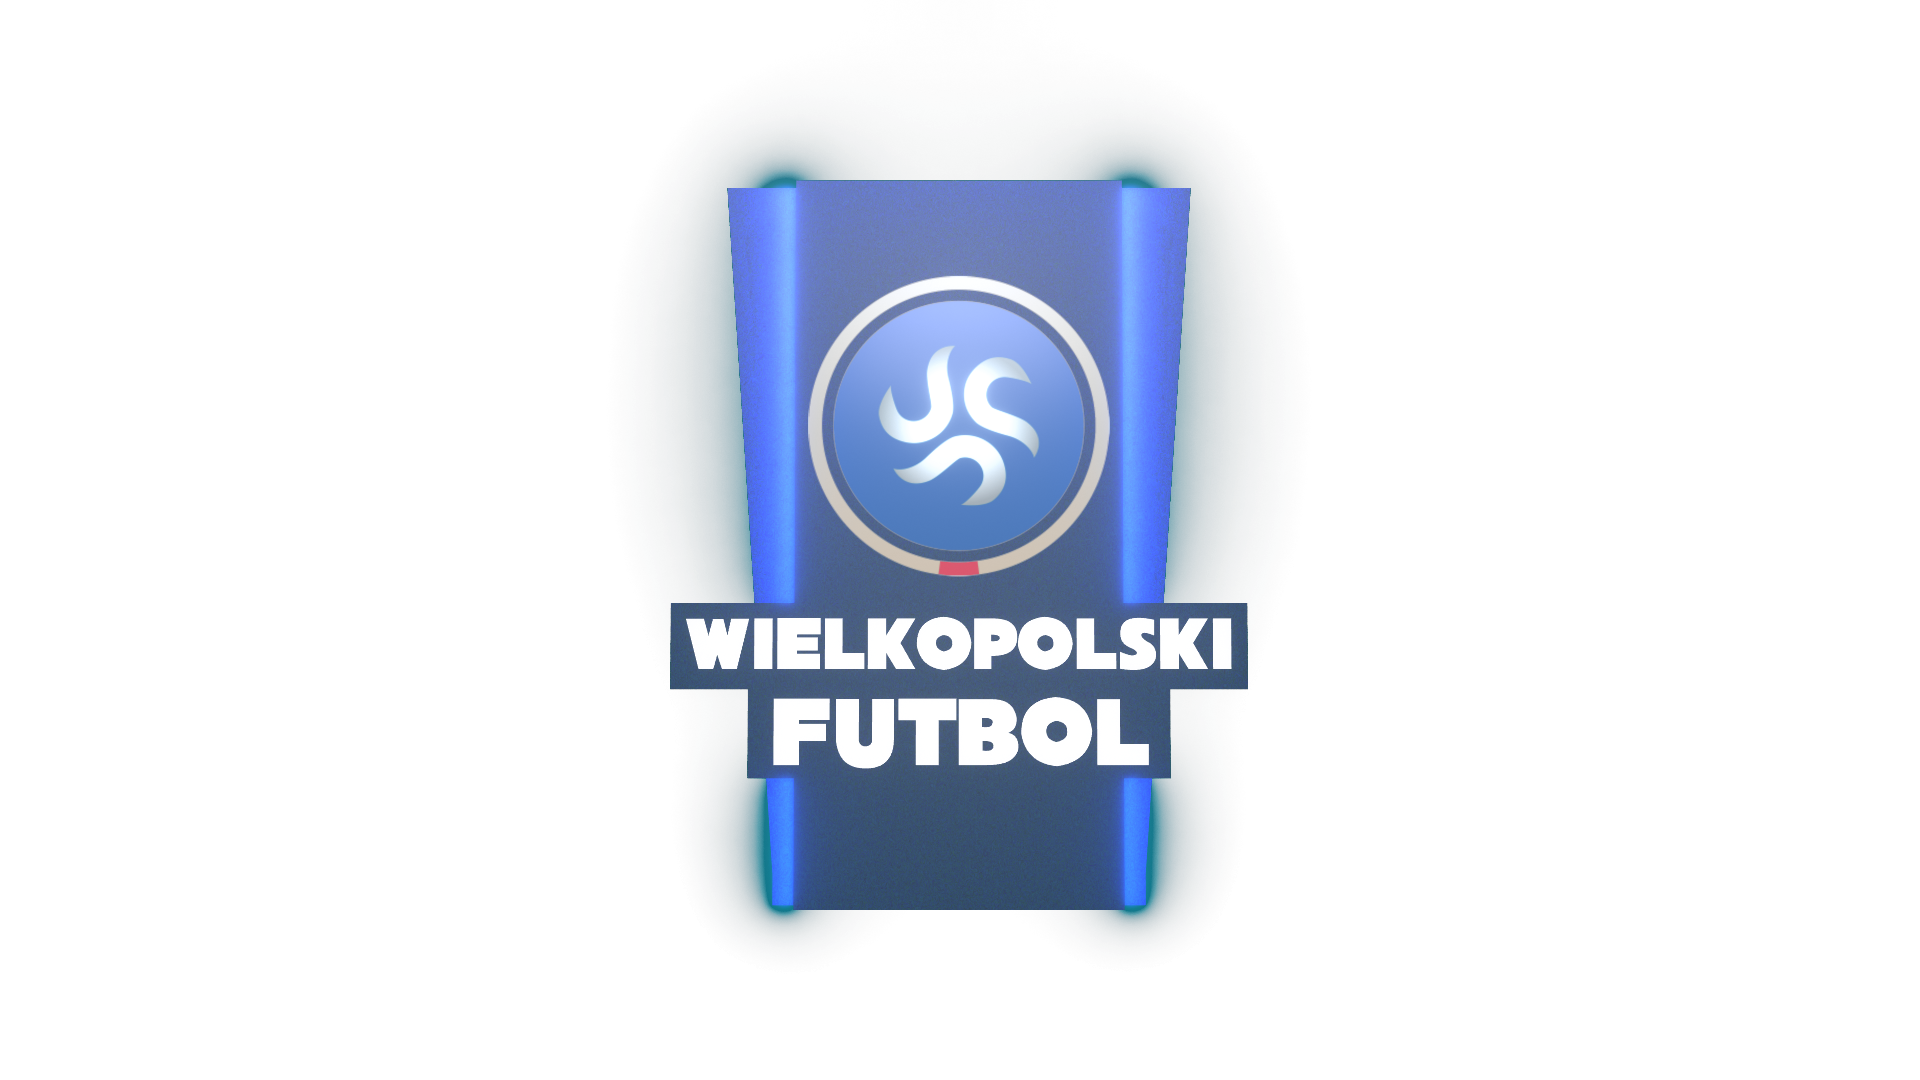 Wielkopolski Futbol